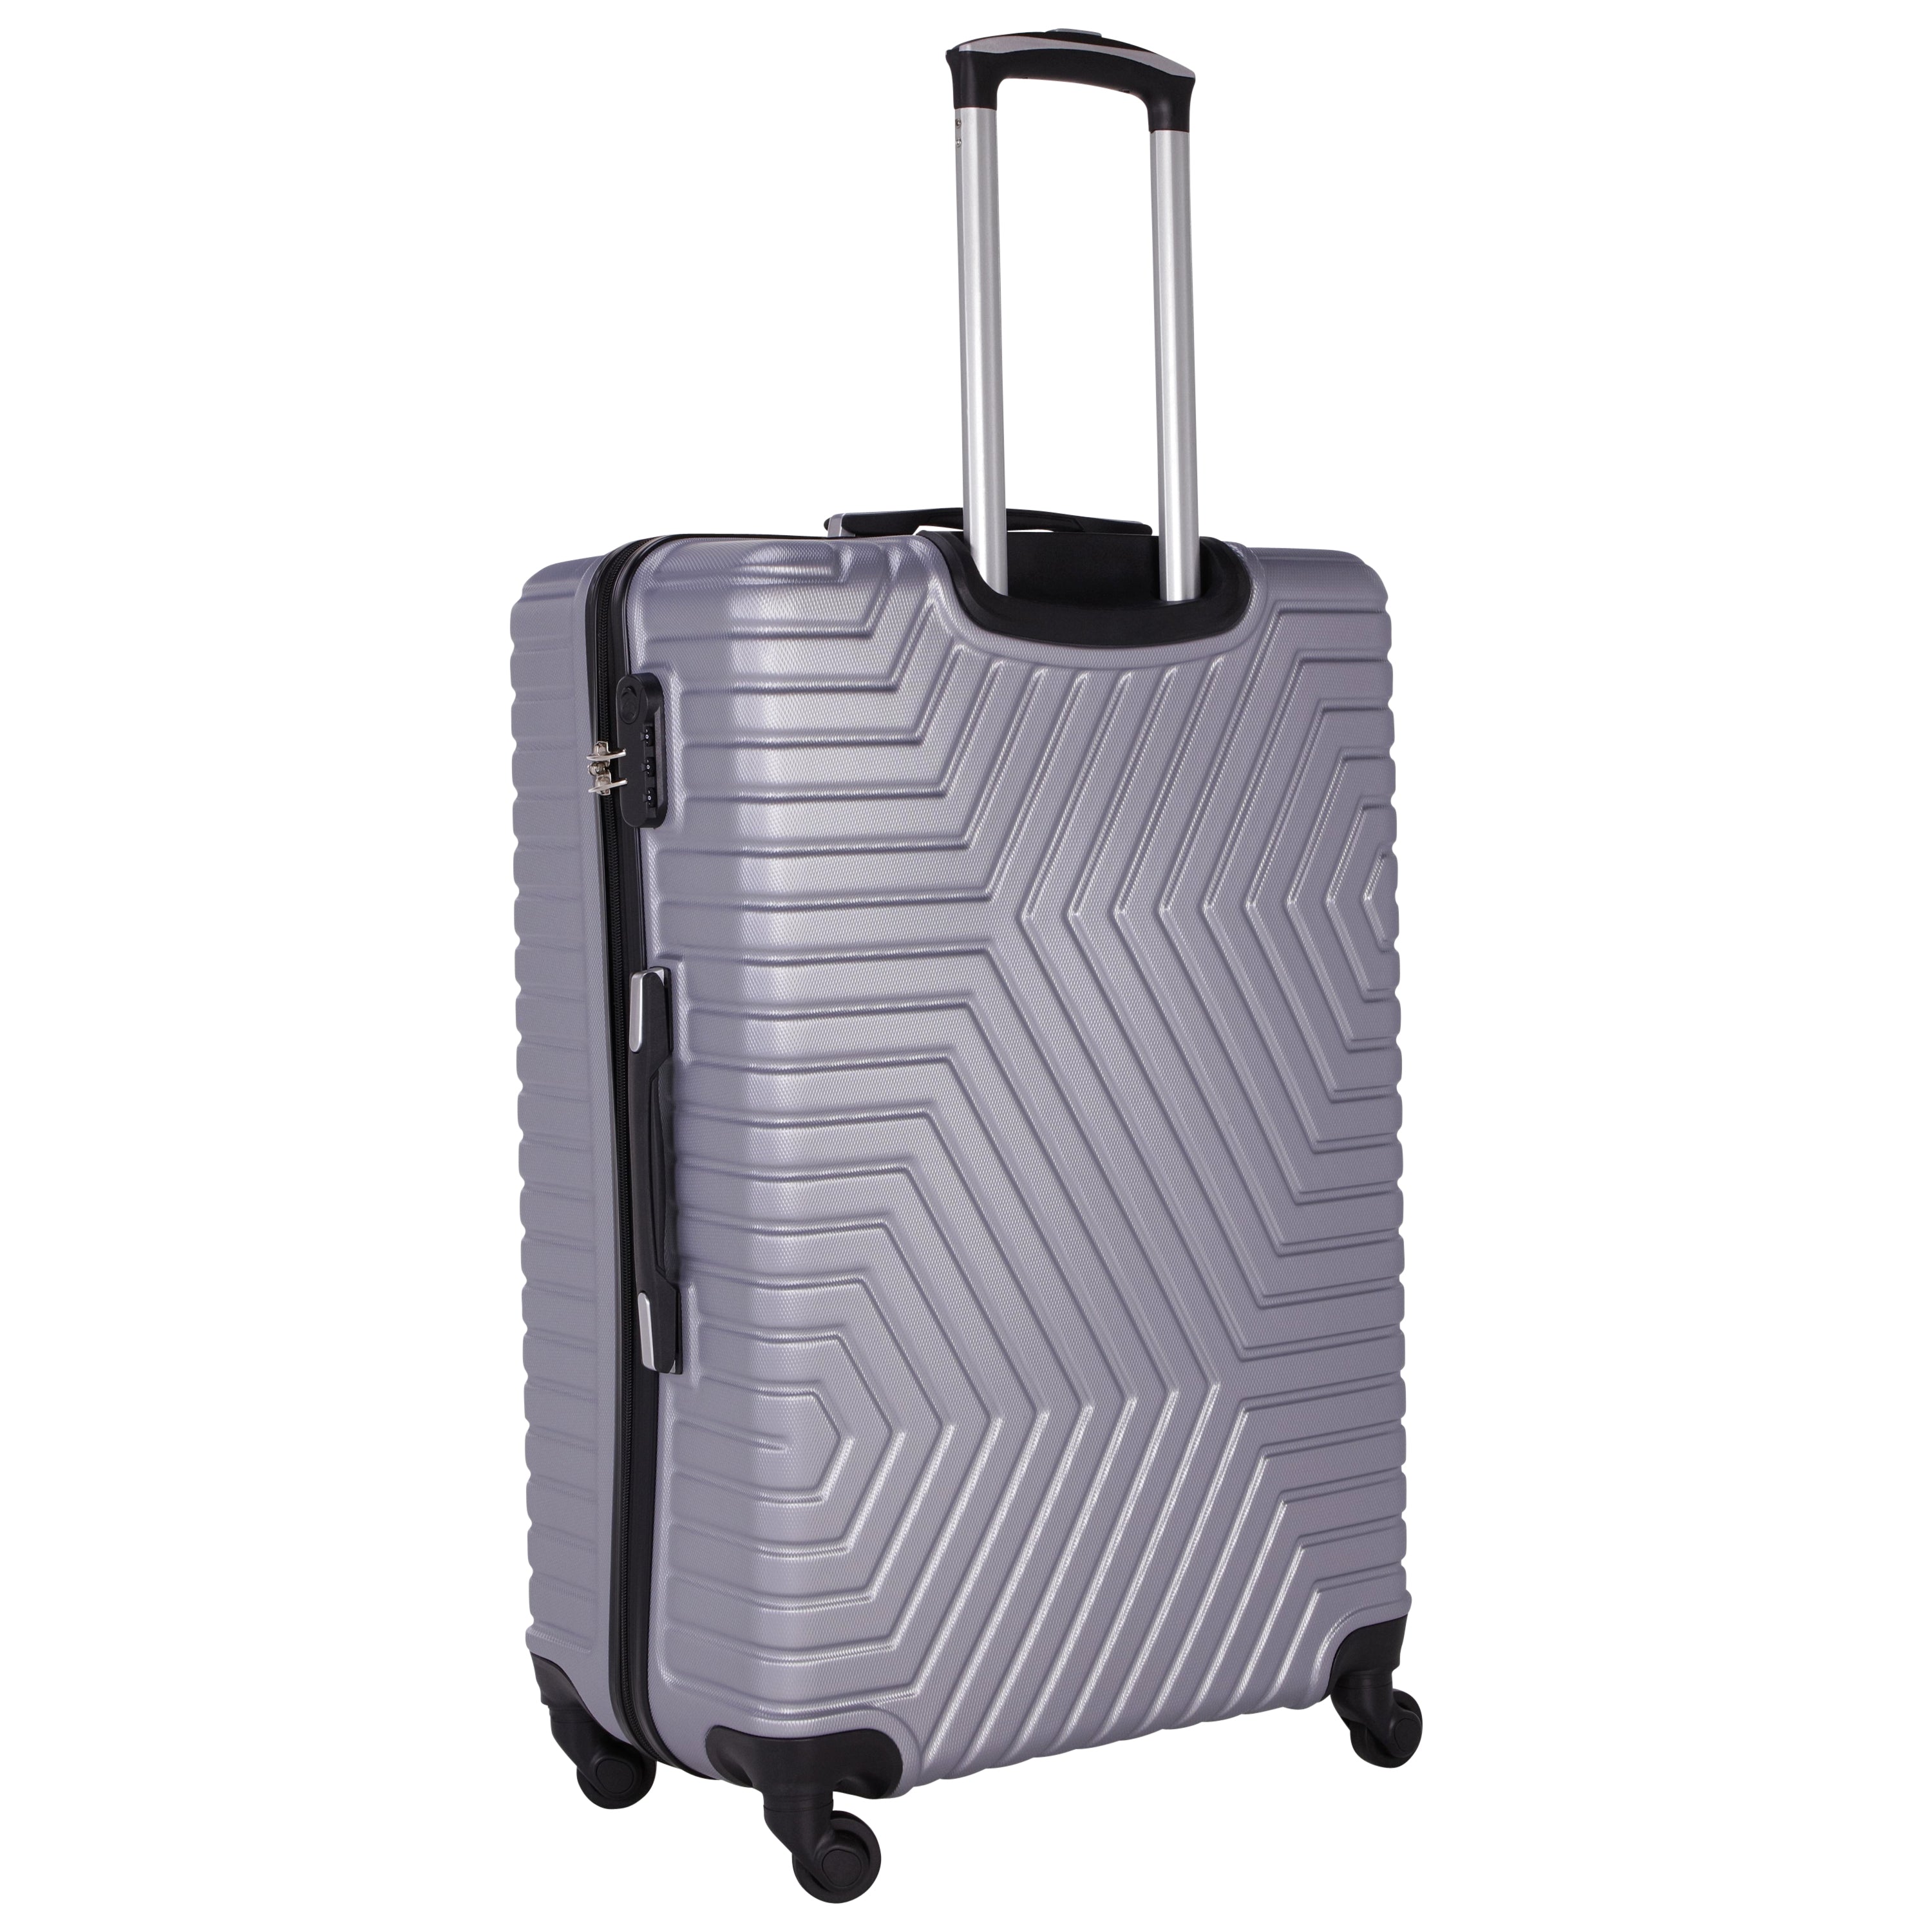 Checked luggage by Senator (KH9035-24) - buyluggageonline